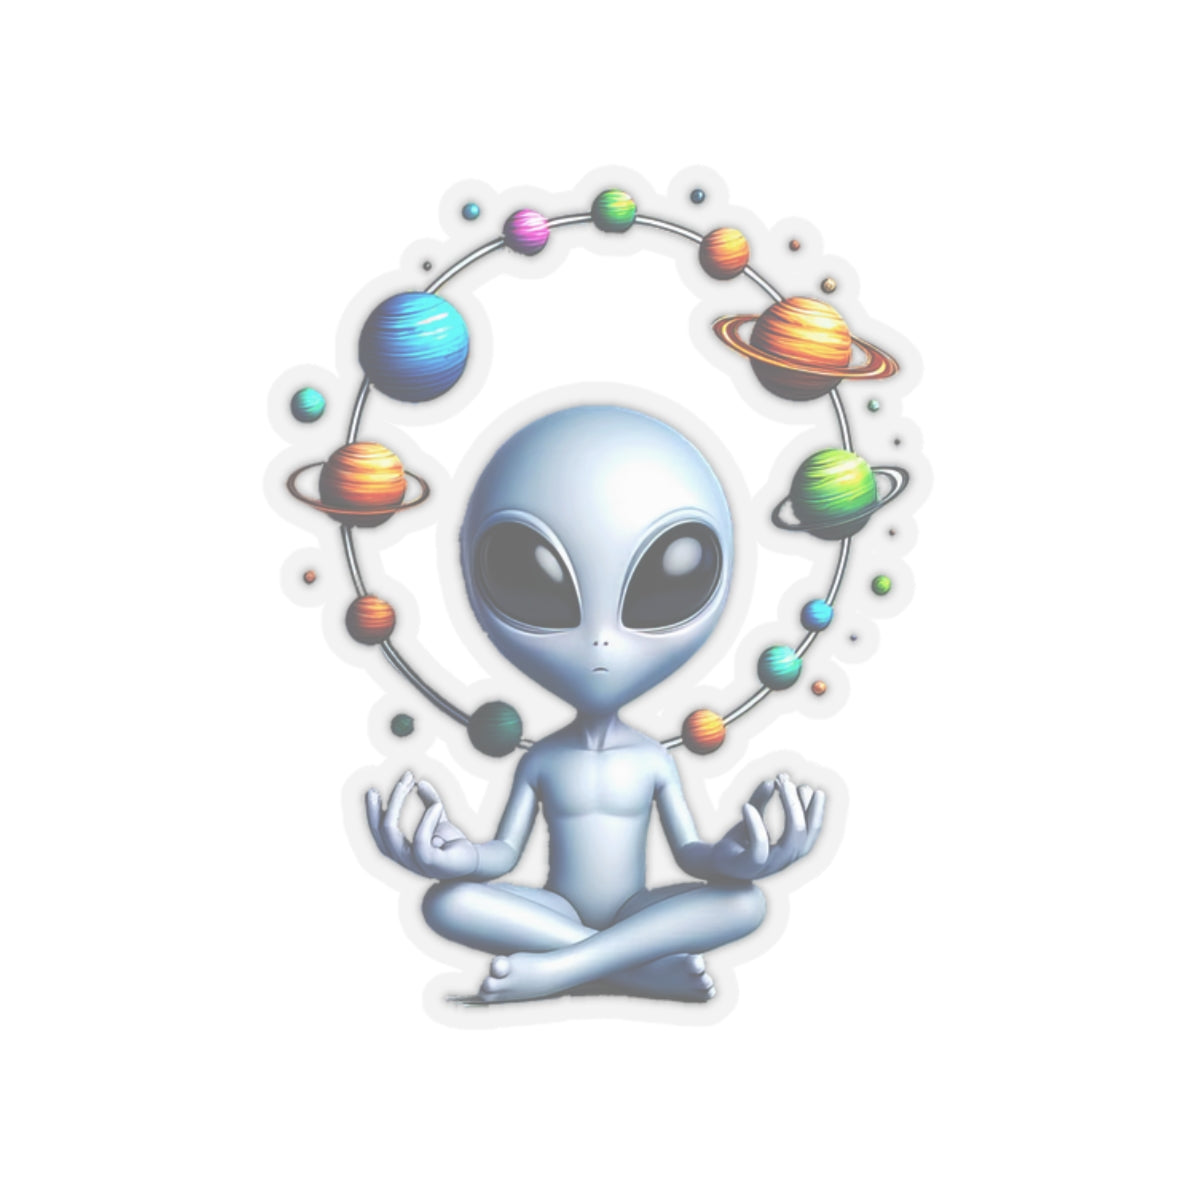 Trans Meditation in the Cosmos: Alien Sticker by Generation Mood